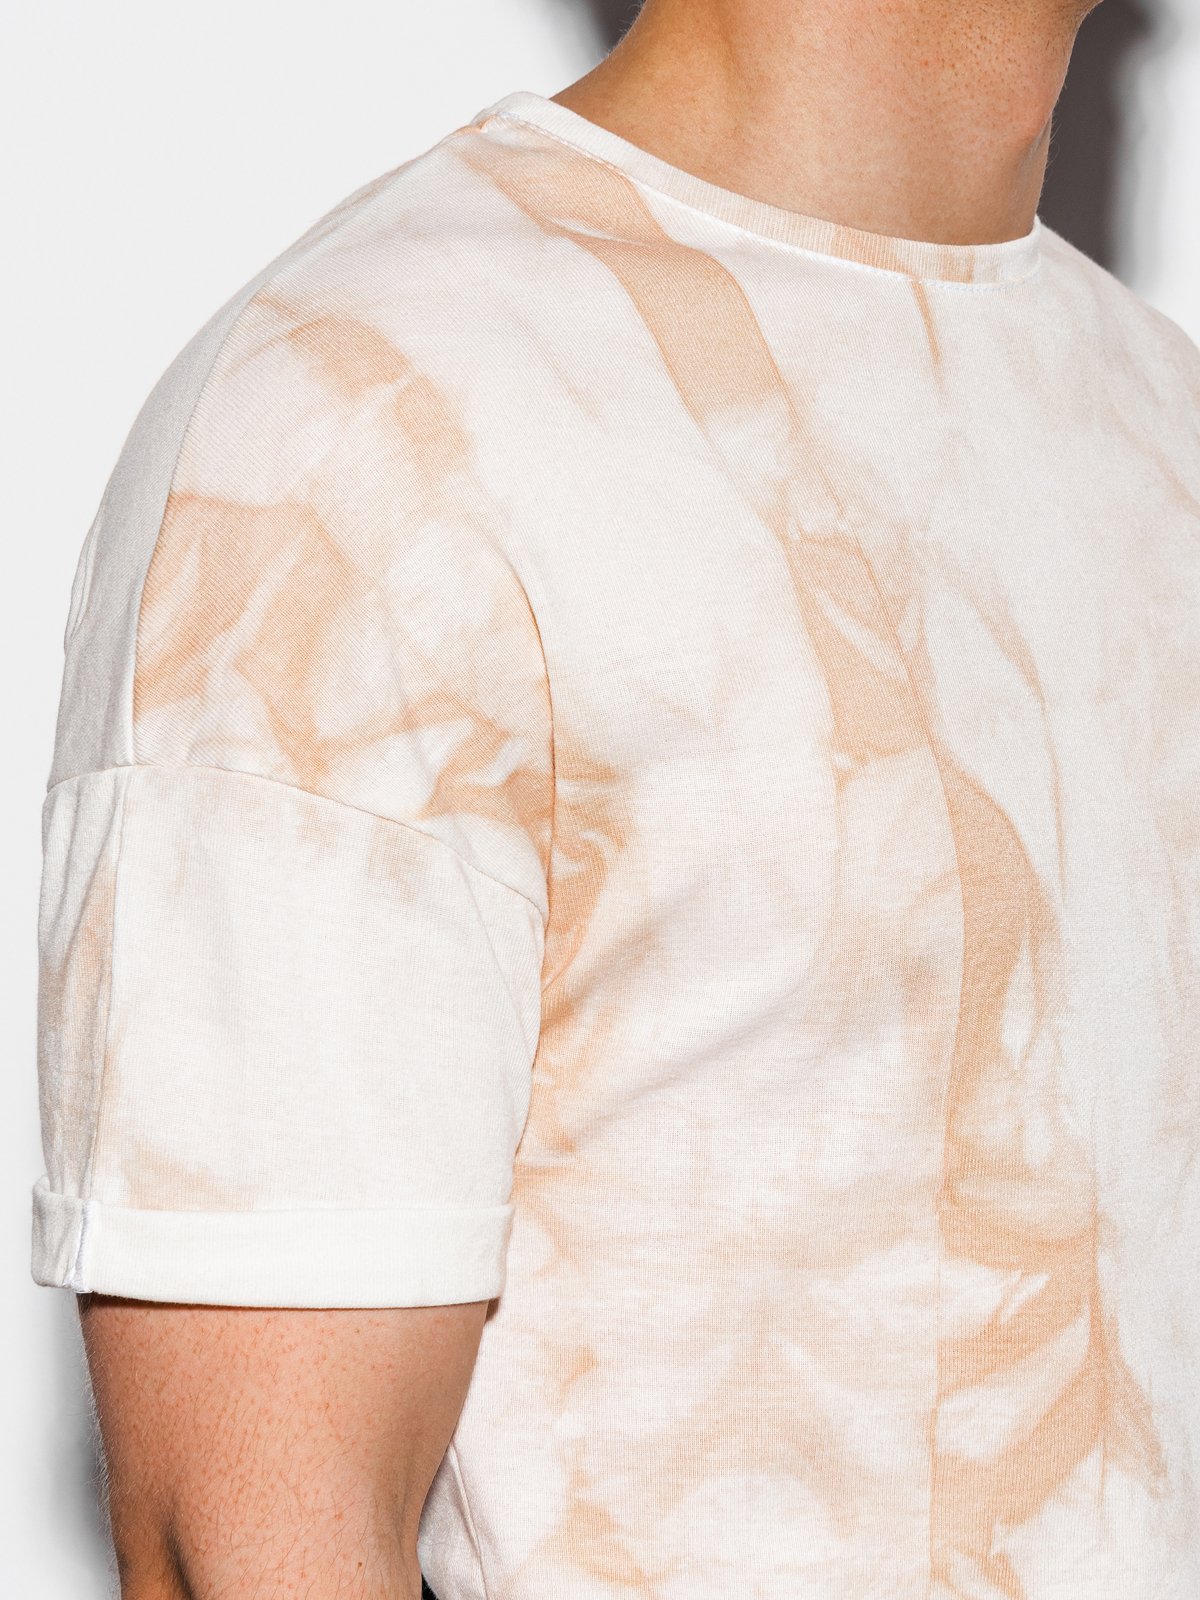 Men's Tie-Dye t-shirt S1219 - beige | MODONE wholesale - Clothing For Men